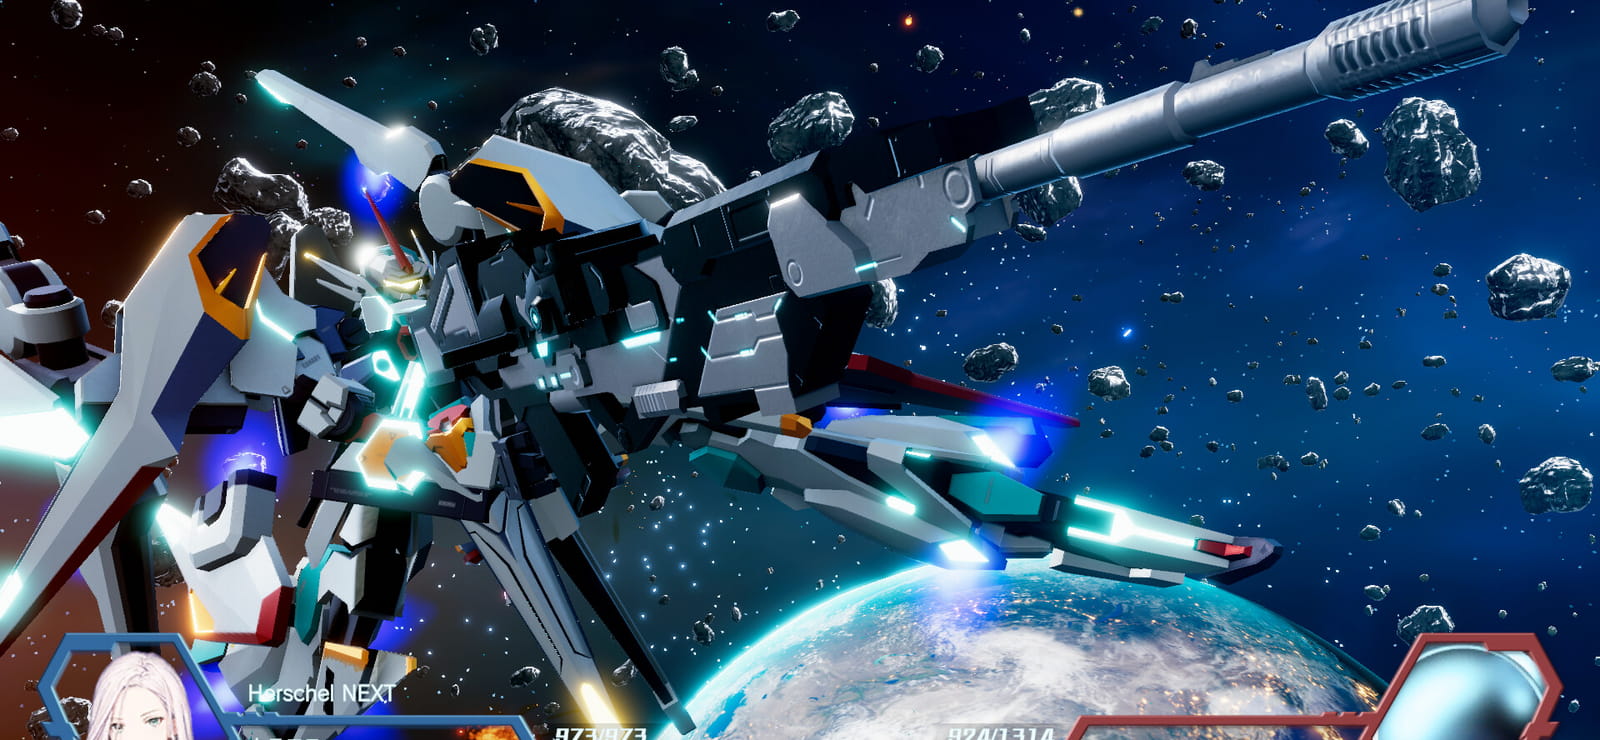 Relayer Advanced DLC- Herschel NEXT